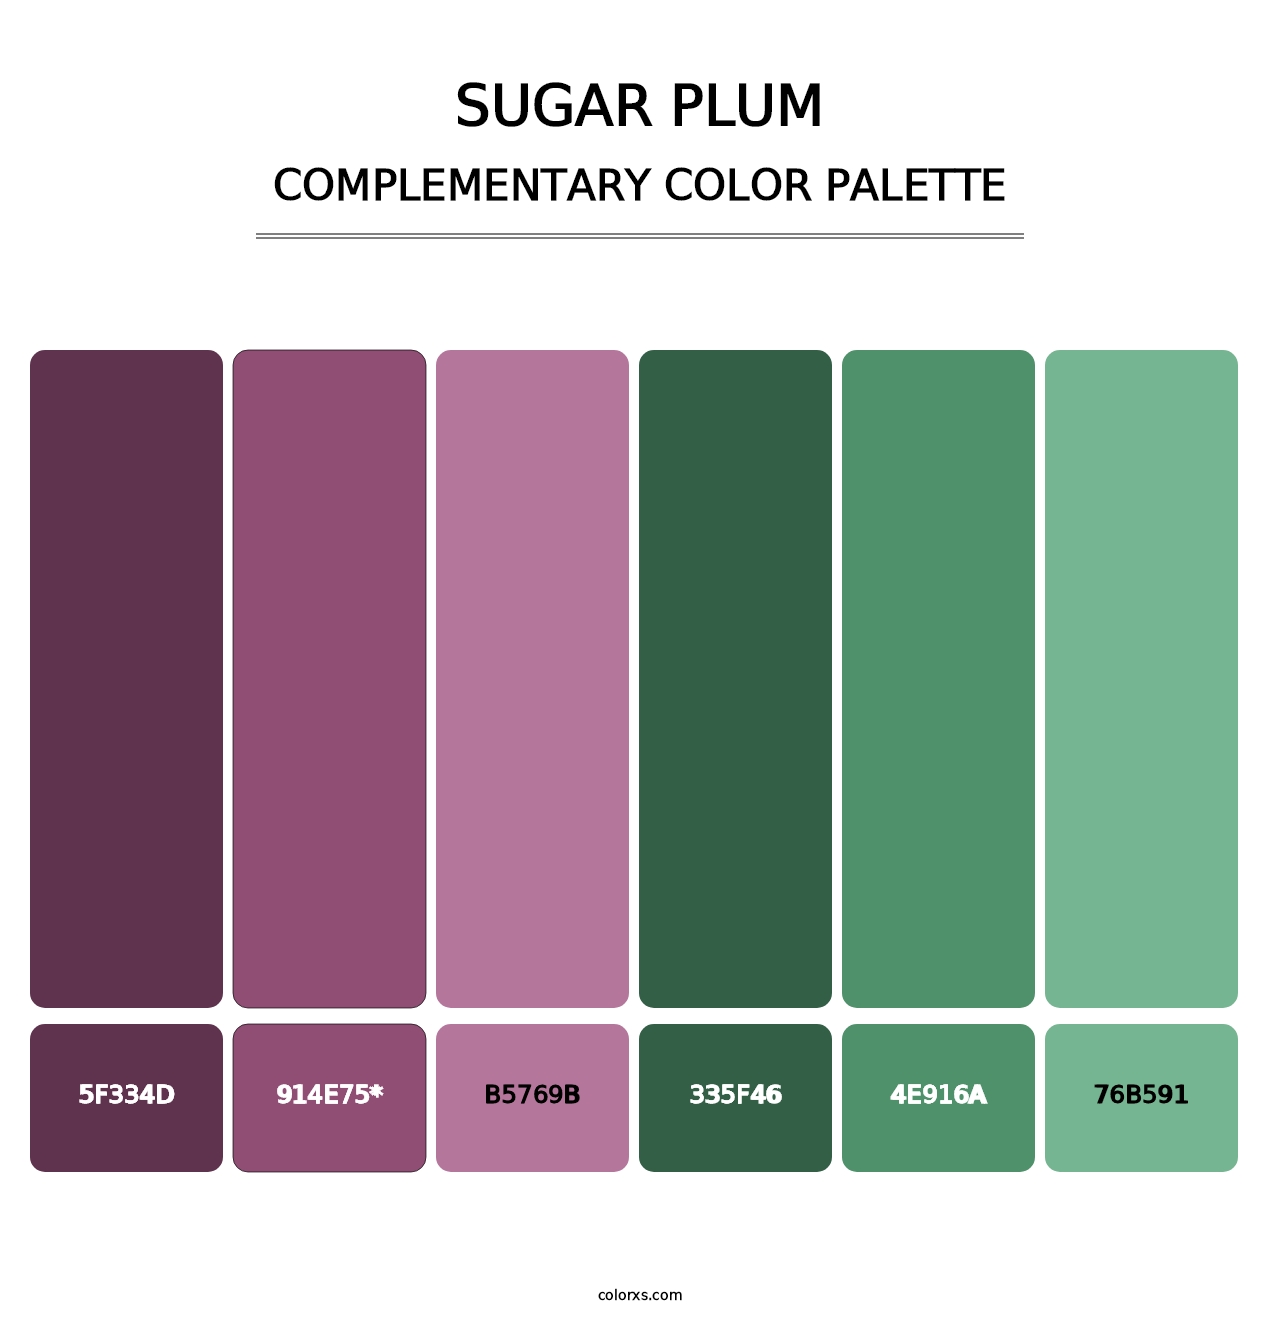 Sugar Plum - Complementary Color Palette